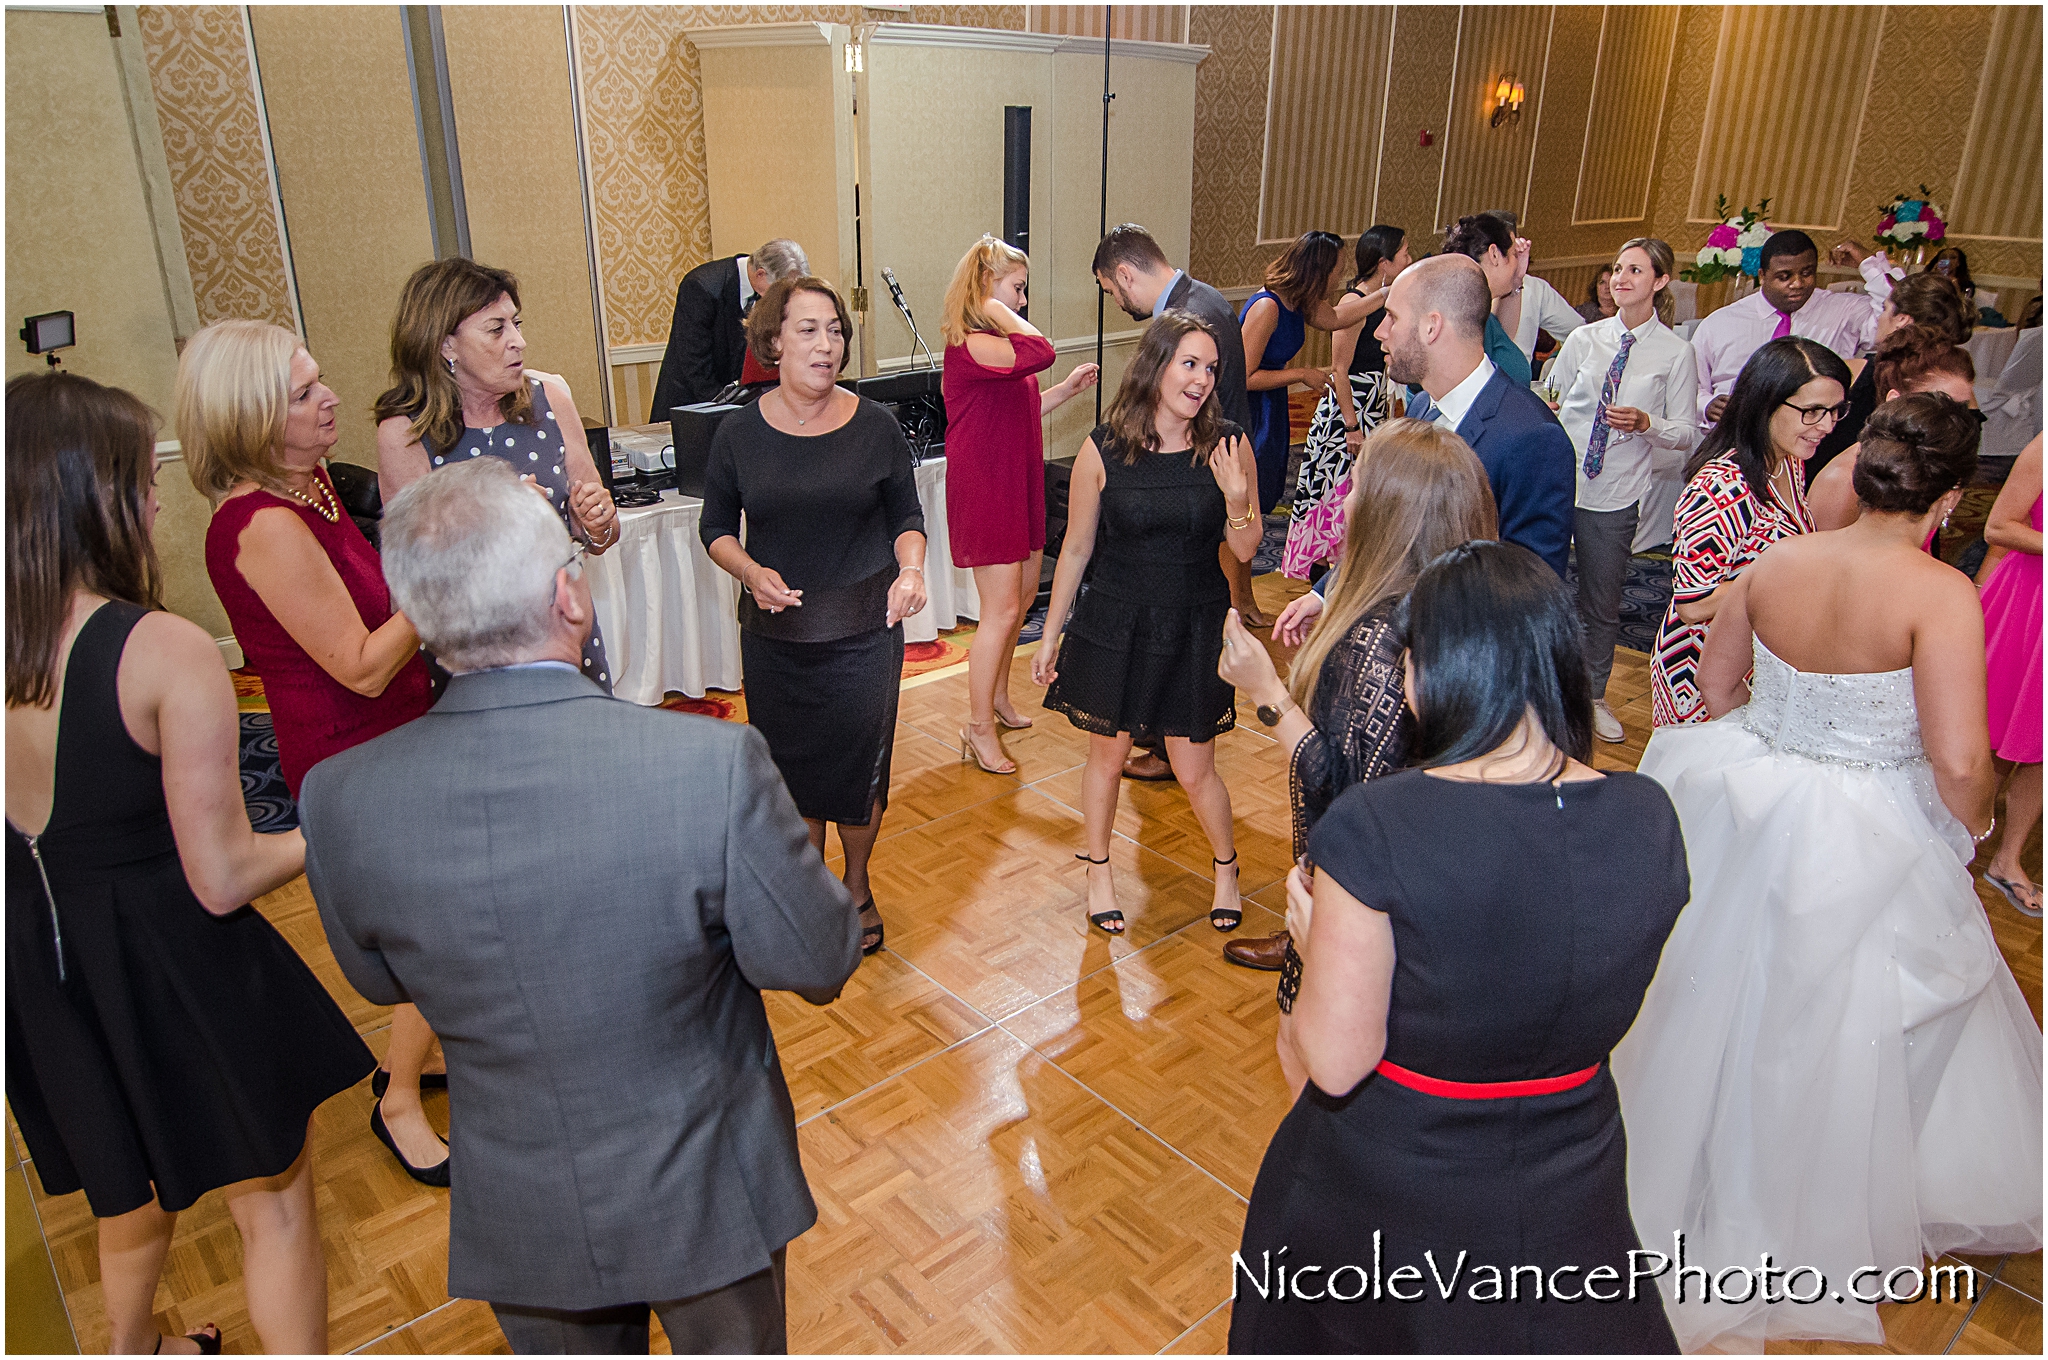 Dancing at the reception at Virginia Crossings.